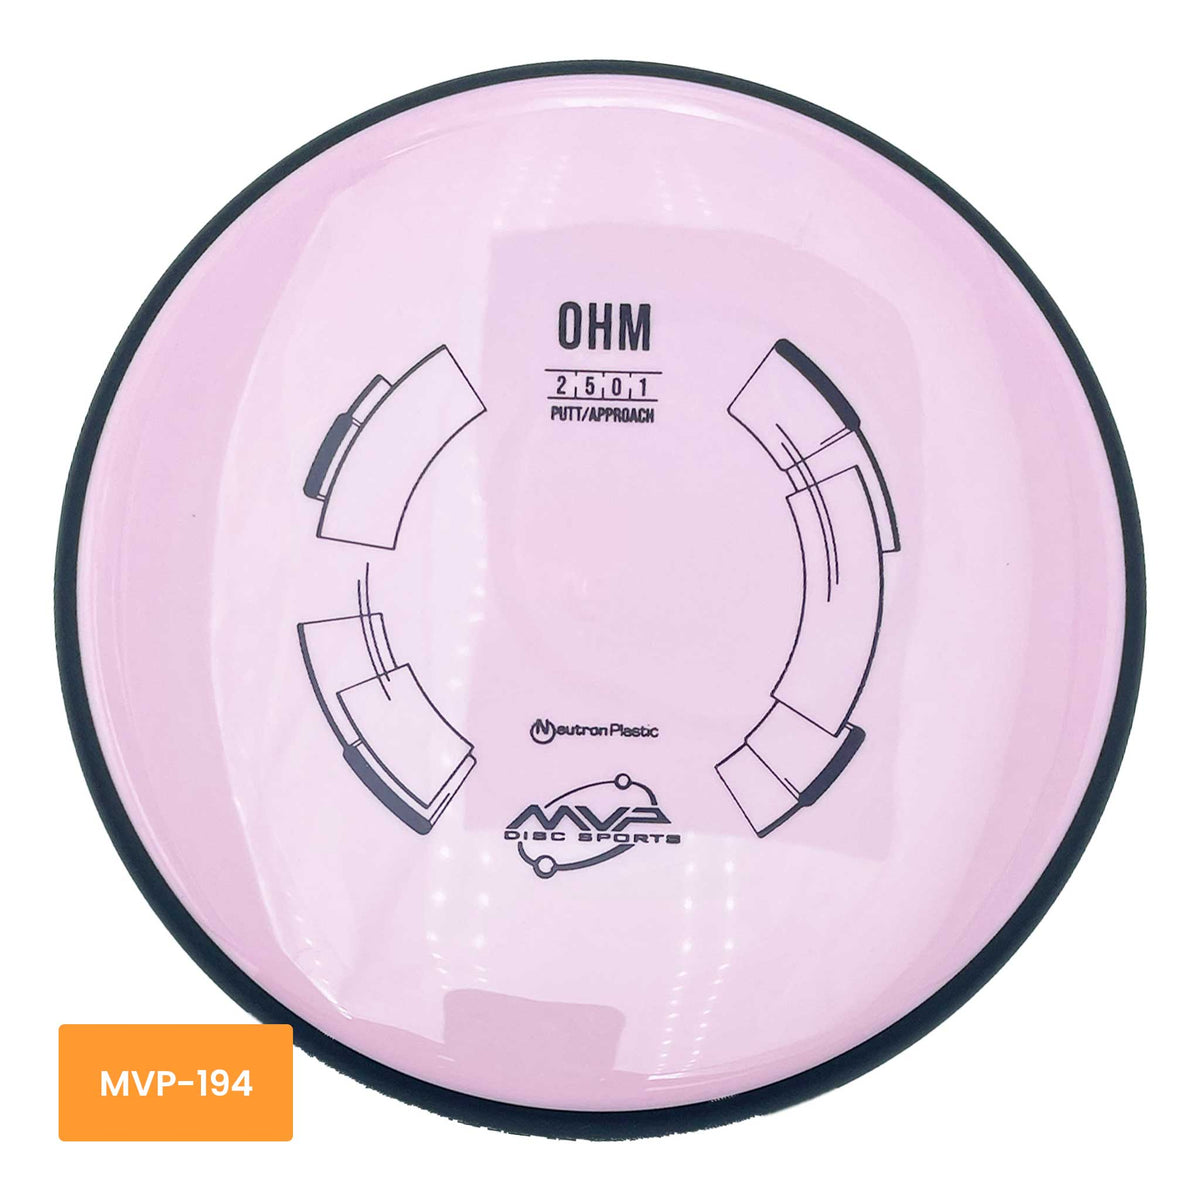 MVP Disc Sports Neutron Ohm putter and approach - Light Pink